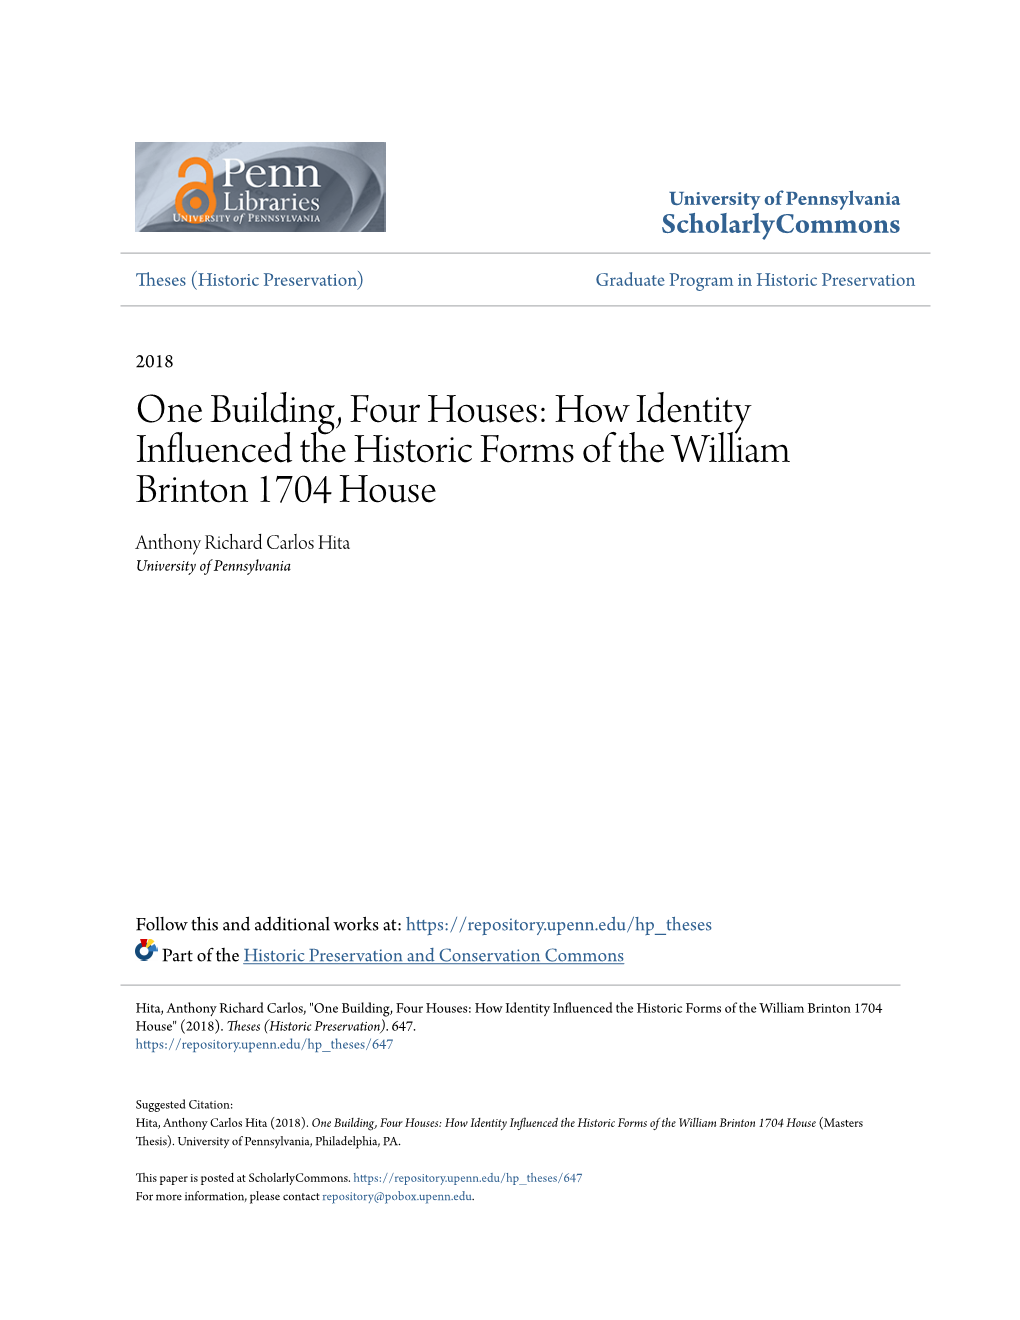 How Identity Influenced the Historic Forms of the William Brinton 1704 House Anthony Richard Carlos Hita University of Pennsylvania